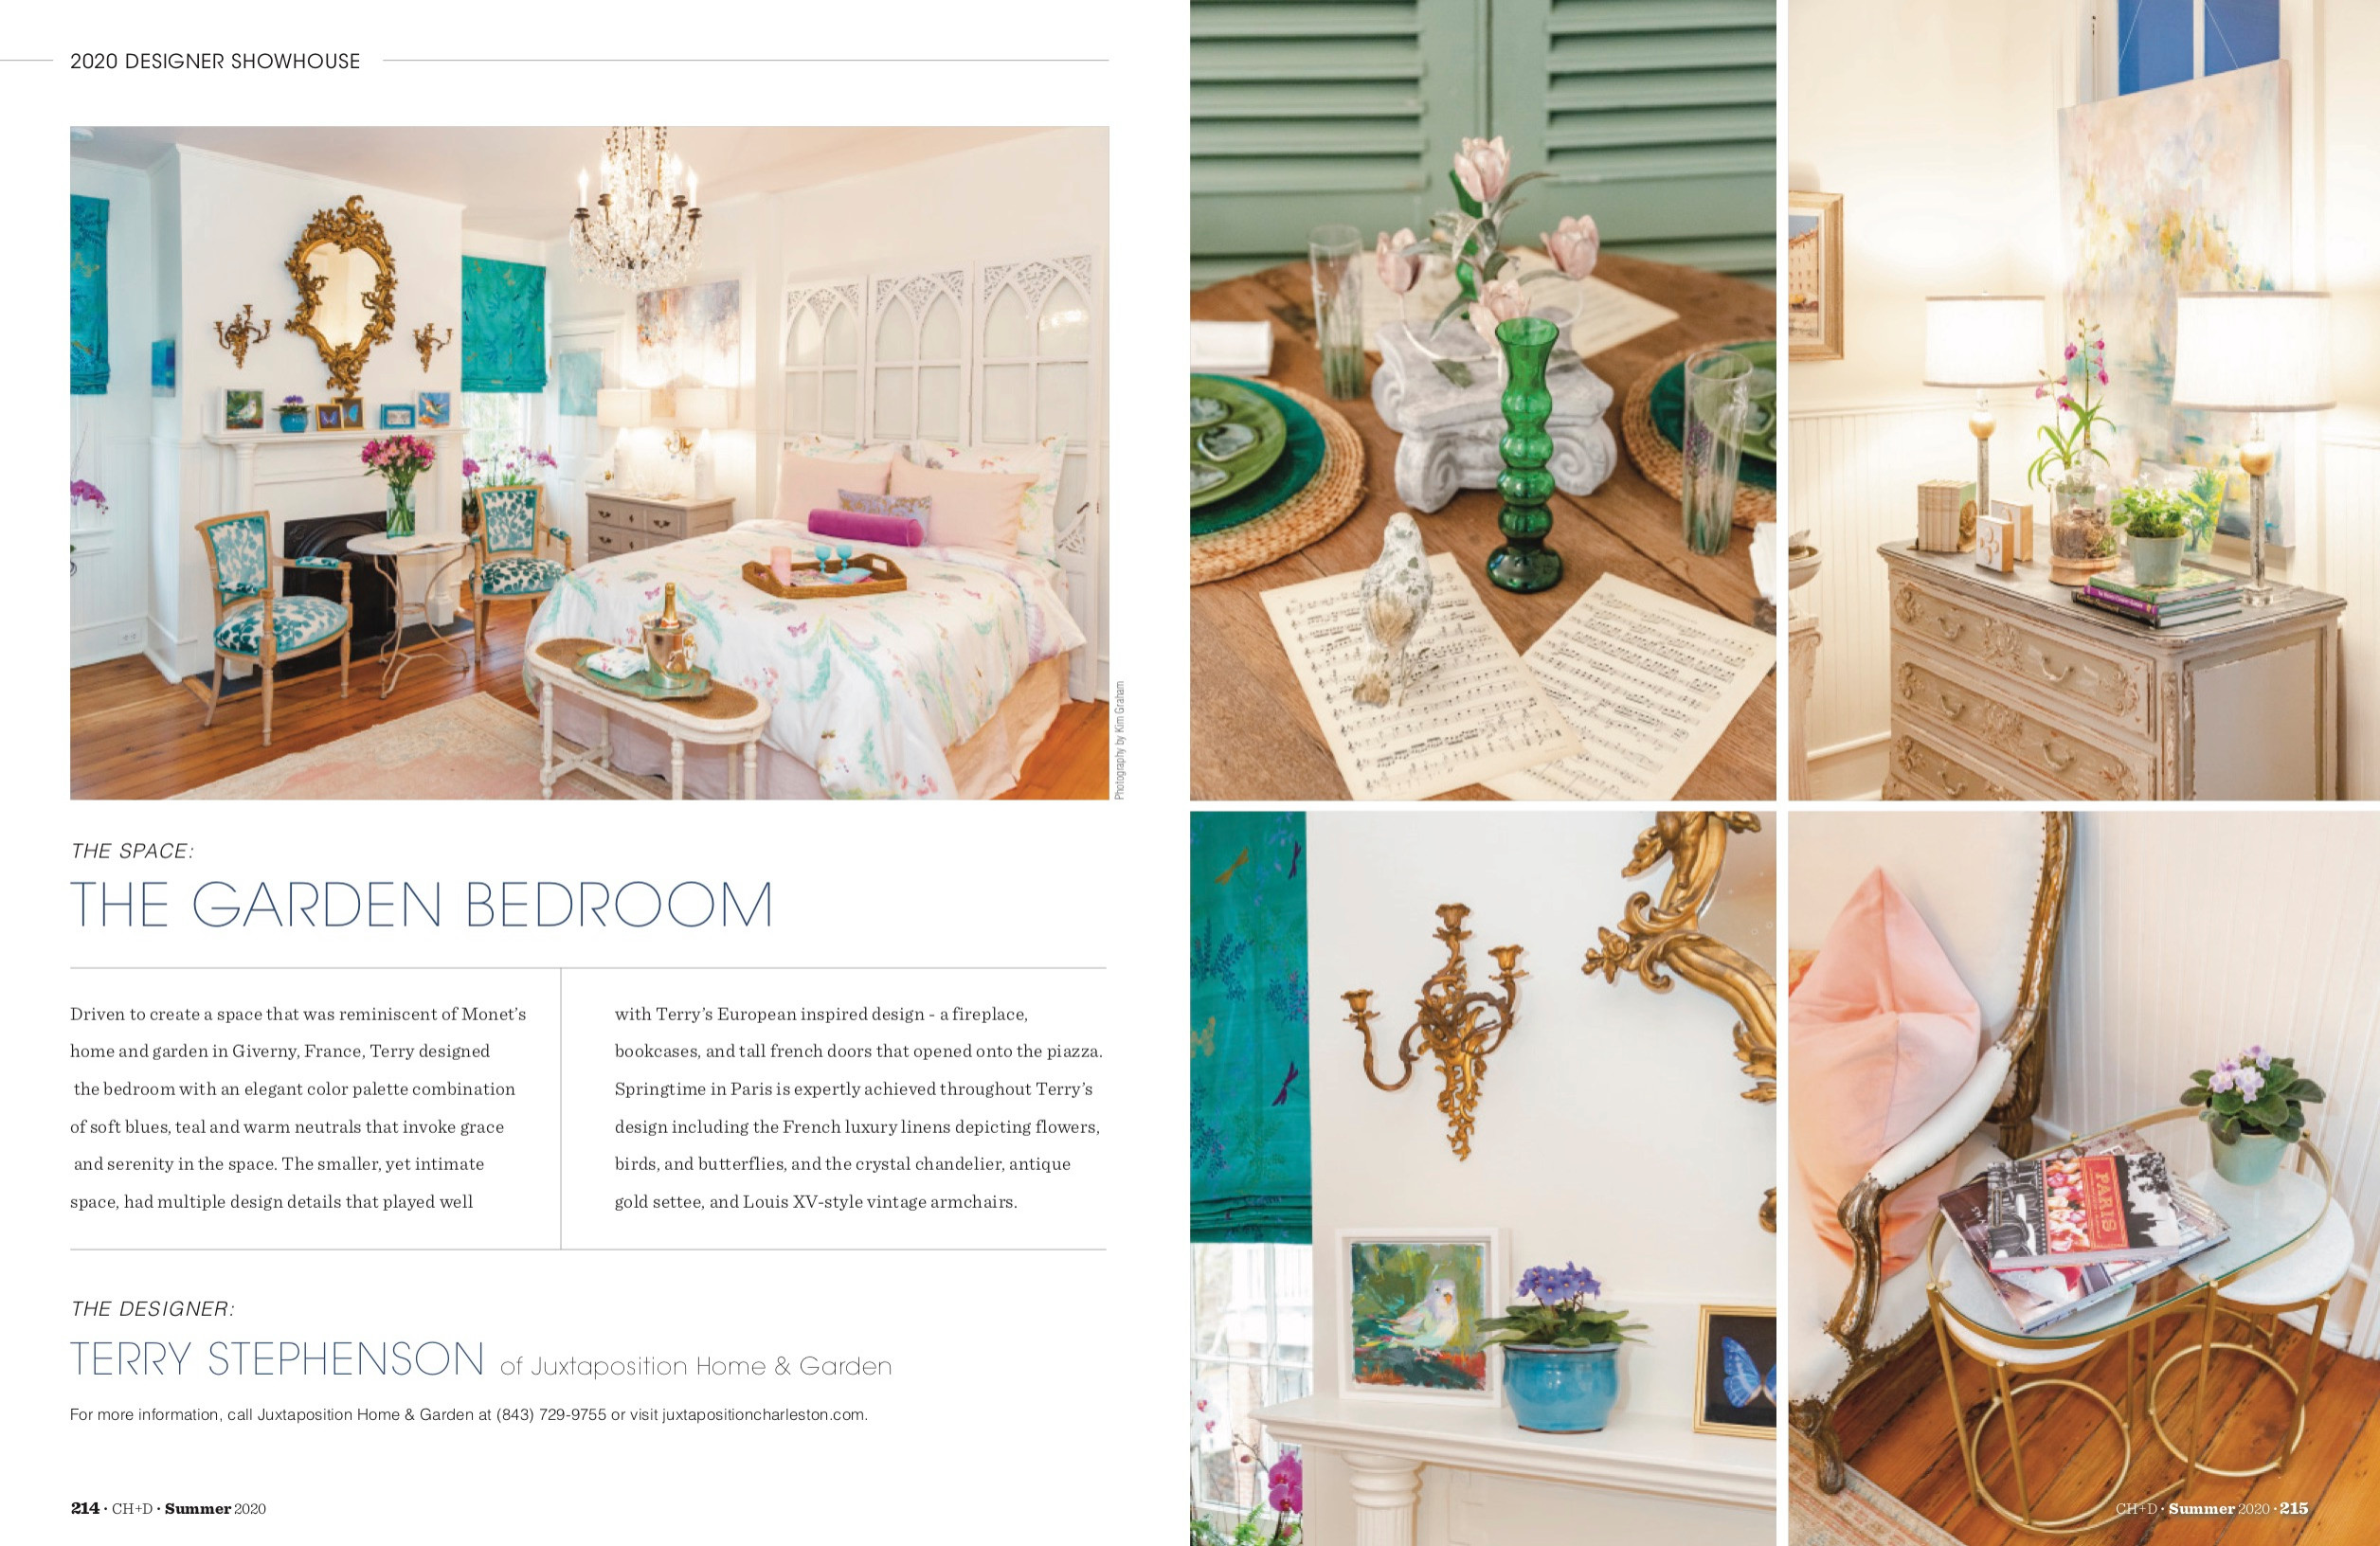 Charleston Home + Design Magazine: CSOL Showhouse